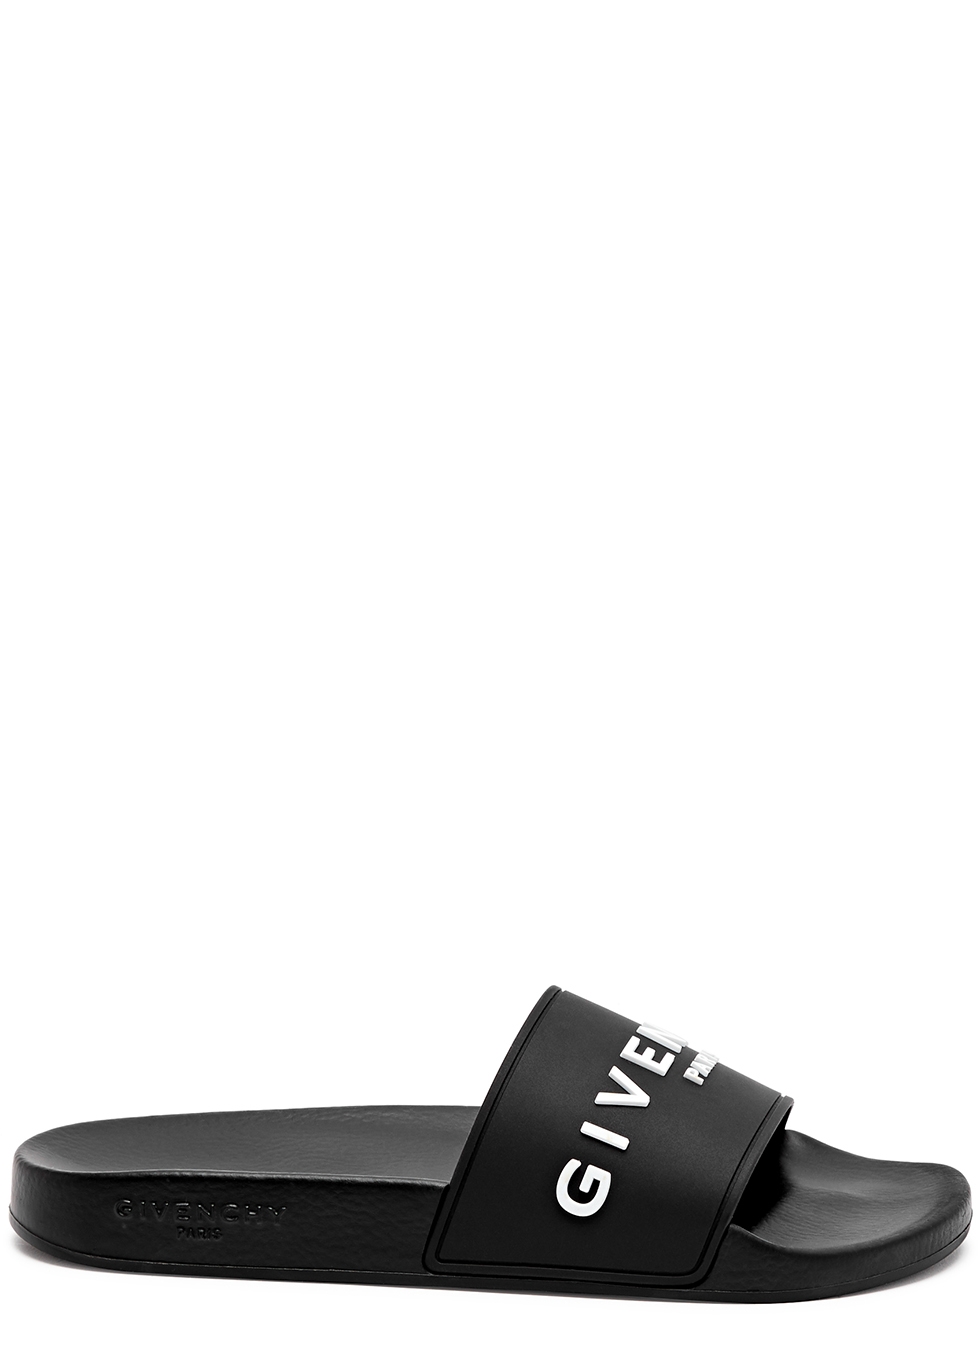 Givenchy Logo rubber sliders - Harvey Nichols